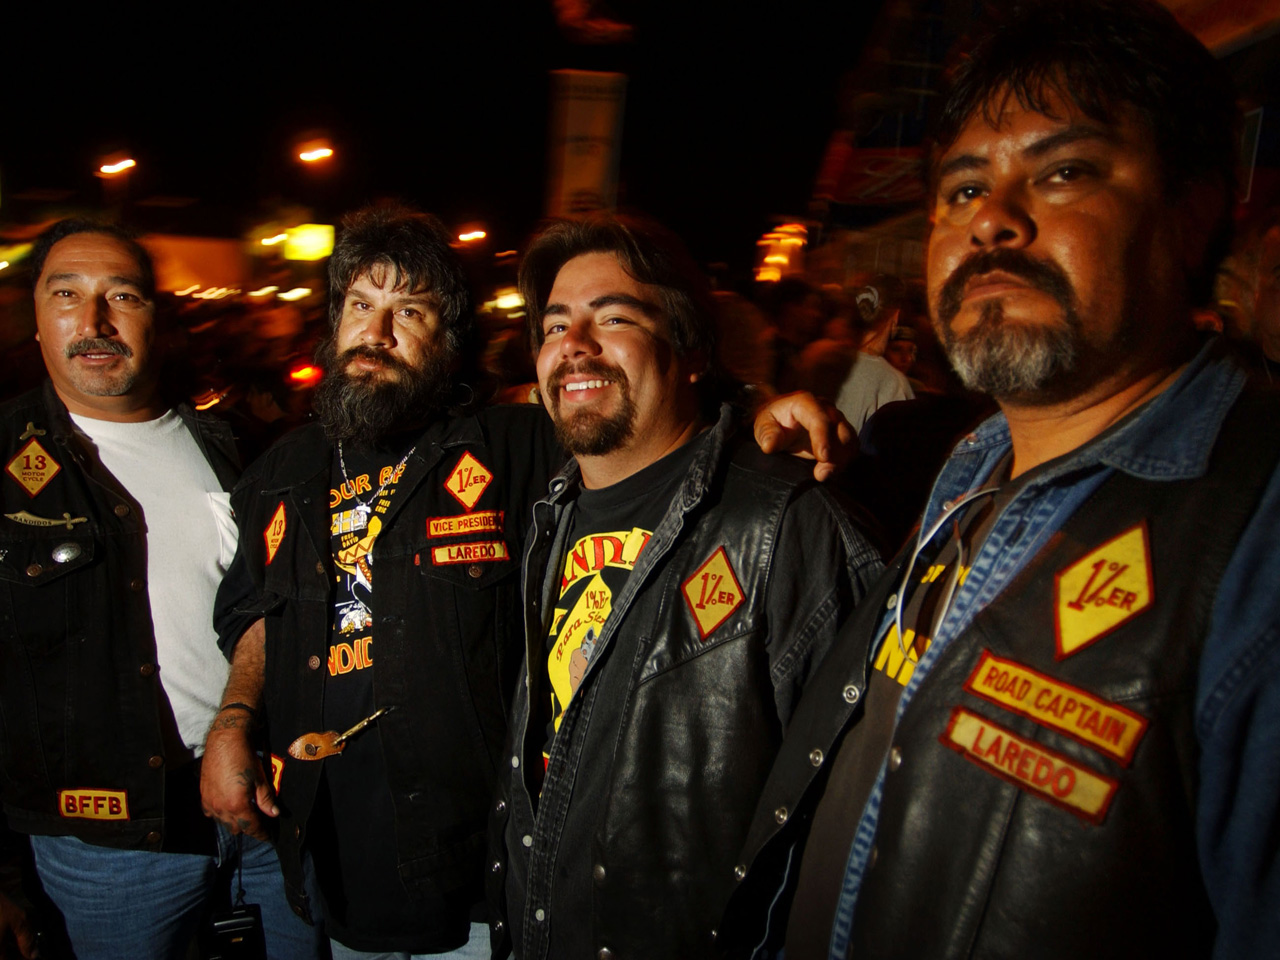 Bandidos vs. Cossacks The biker gang war Texas warned of CBS News